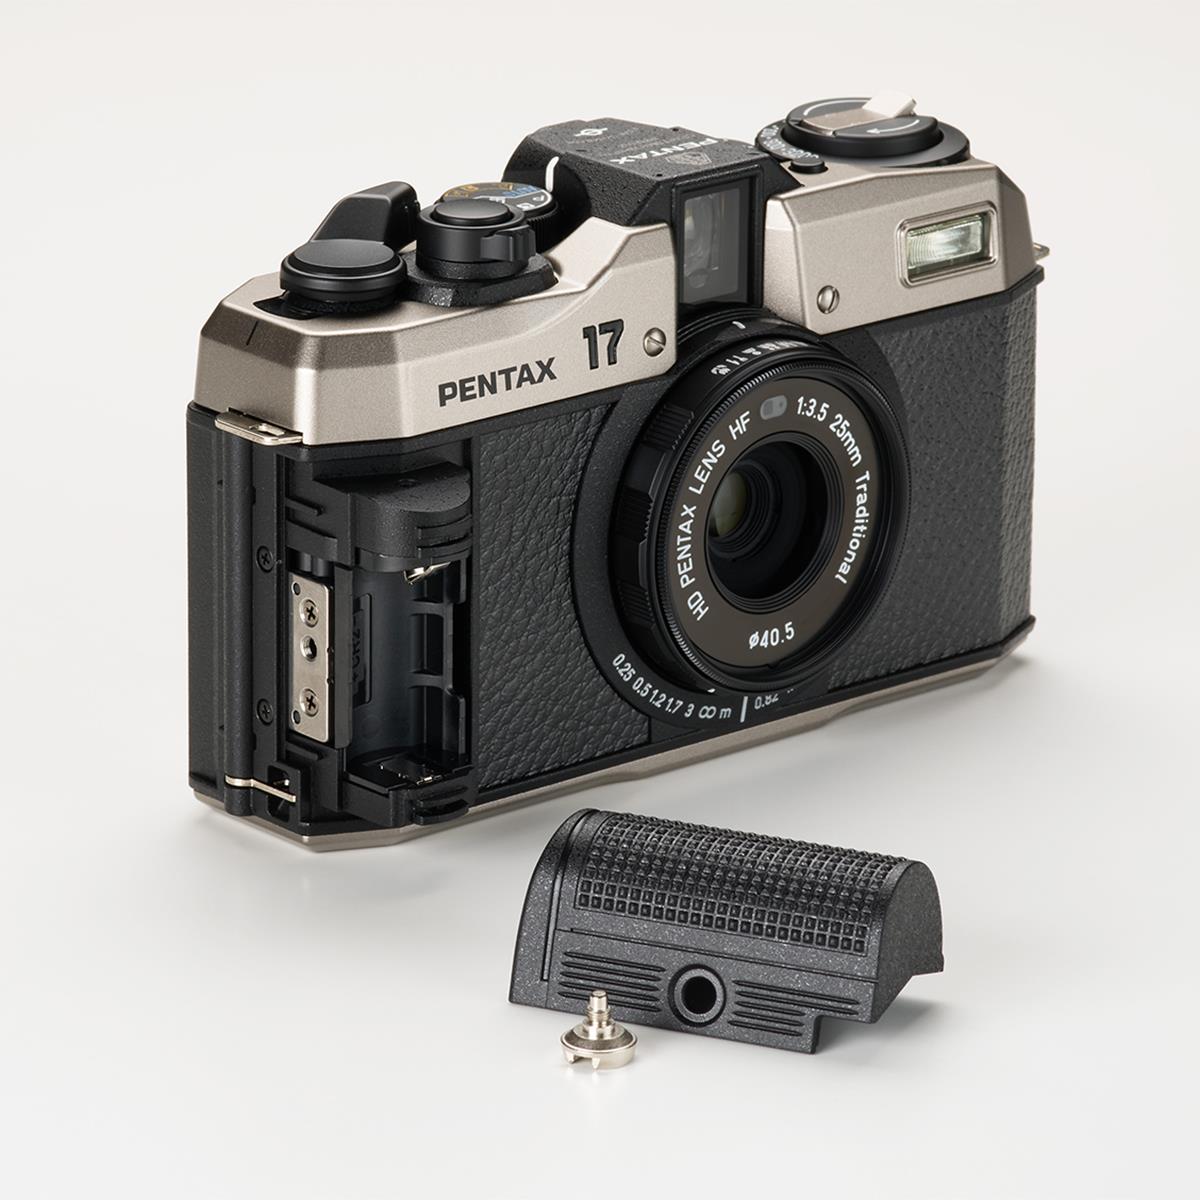 Pentax 17 Film Camera - B&C Camera